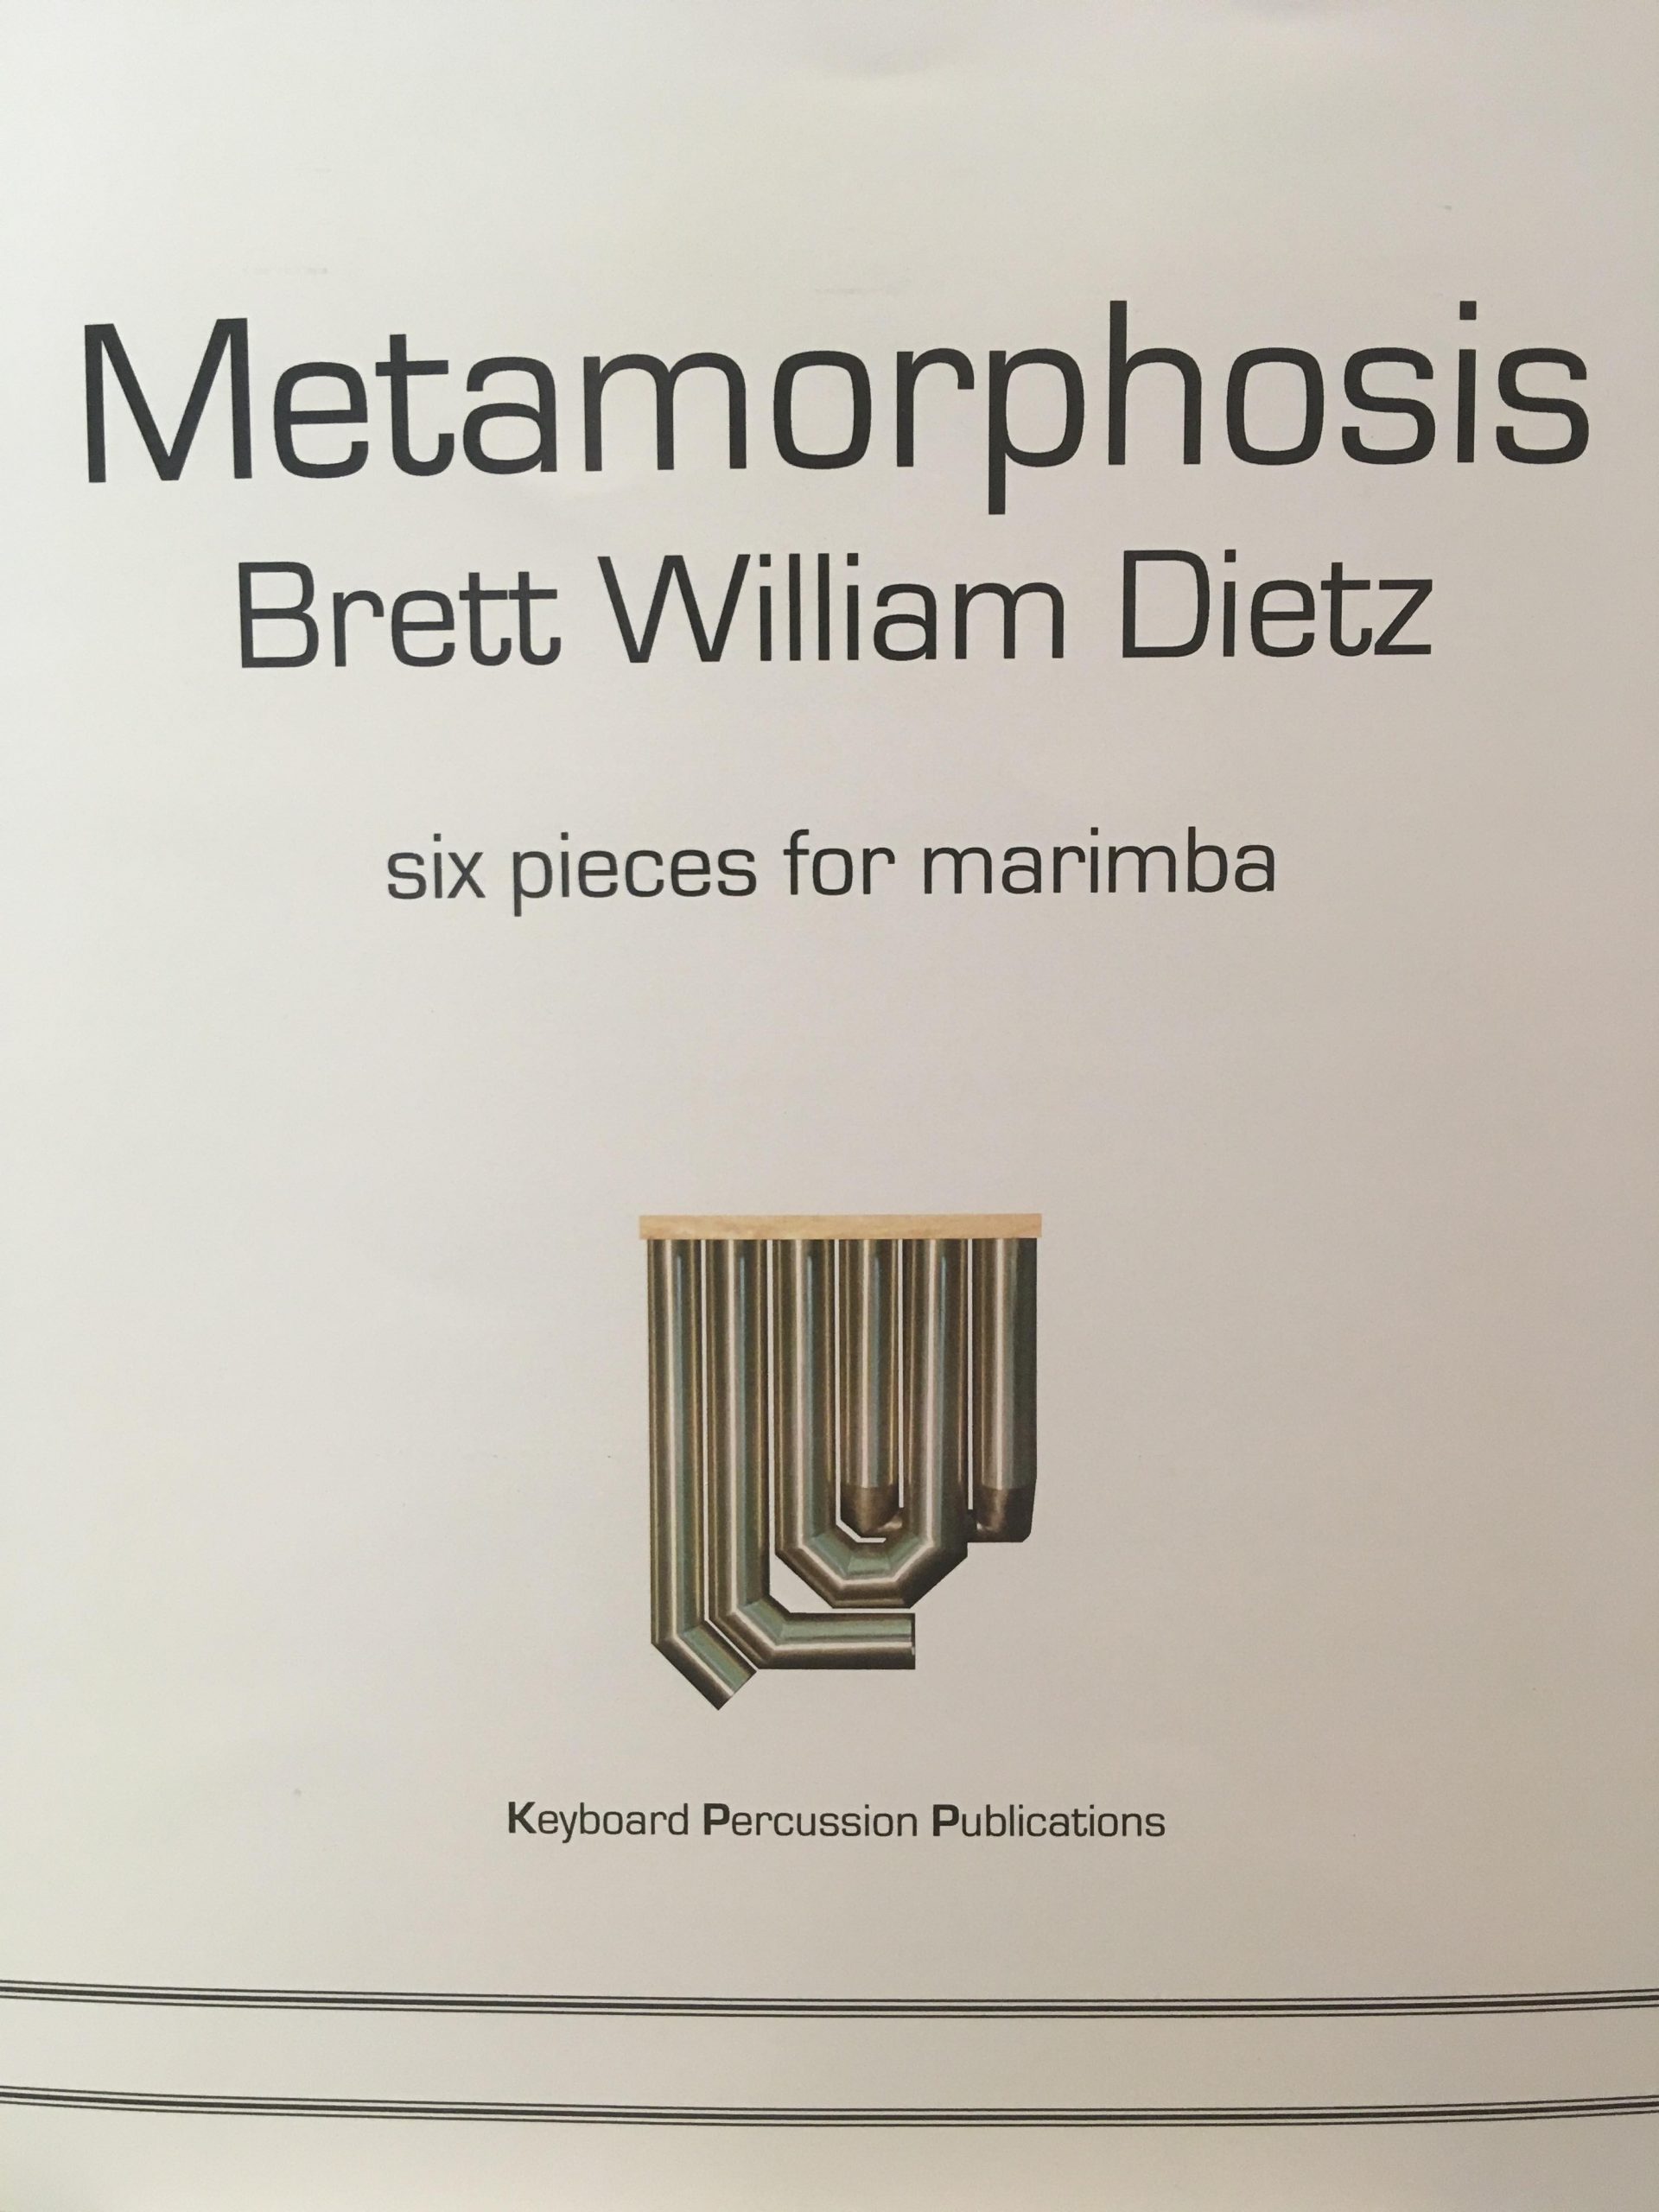 Metamorphosis by William Brett Dietz